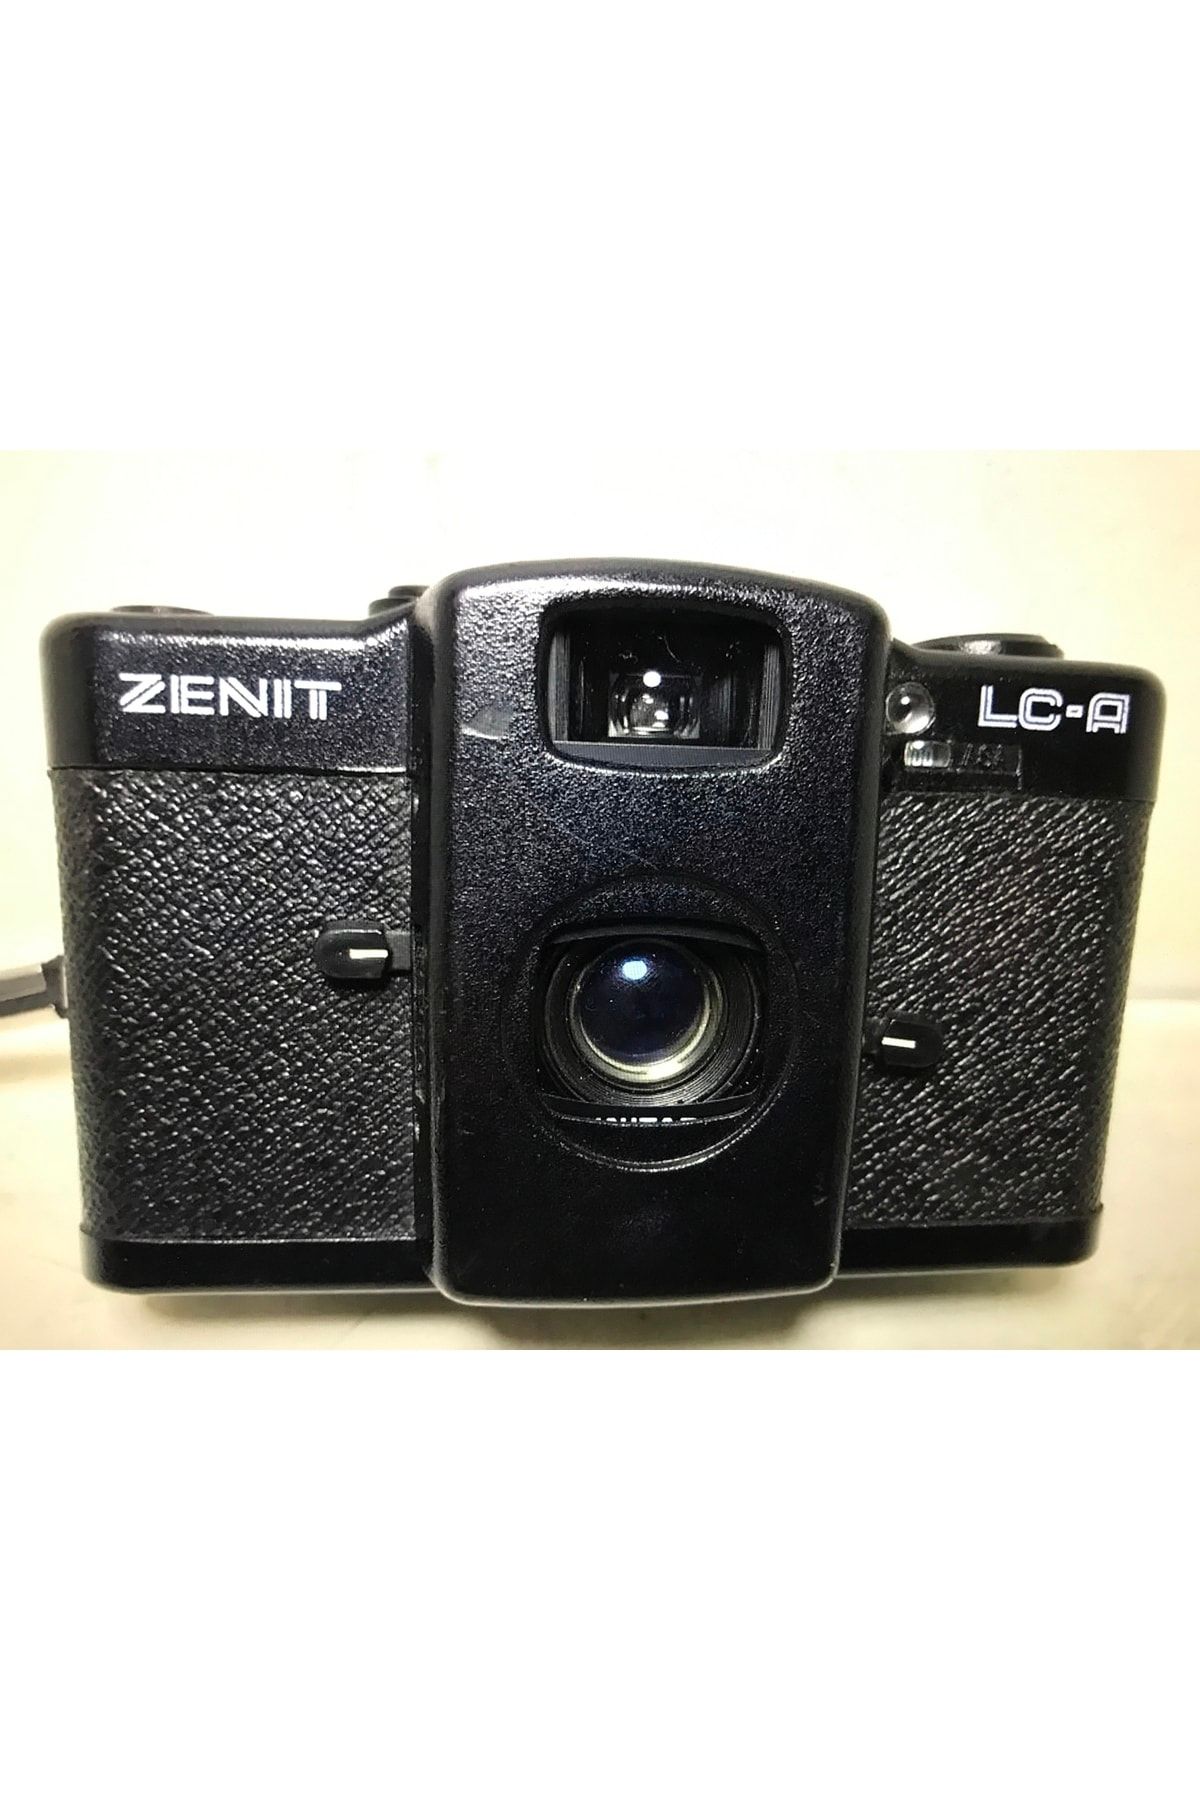 Zenith Zenit Lc-a Minitar 1 Nadir Minik Boy Filmli Fotoğraf Makinası